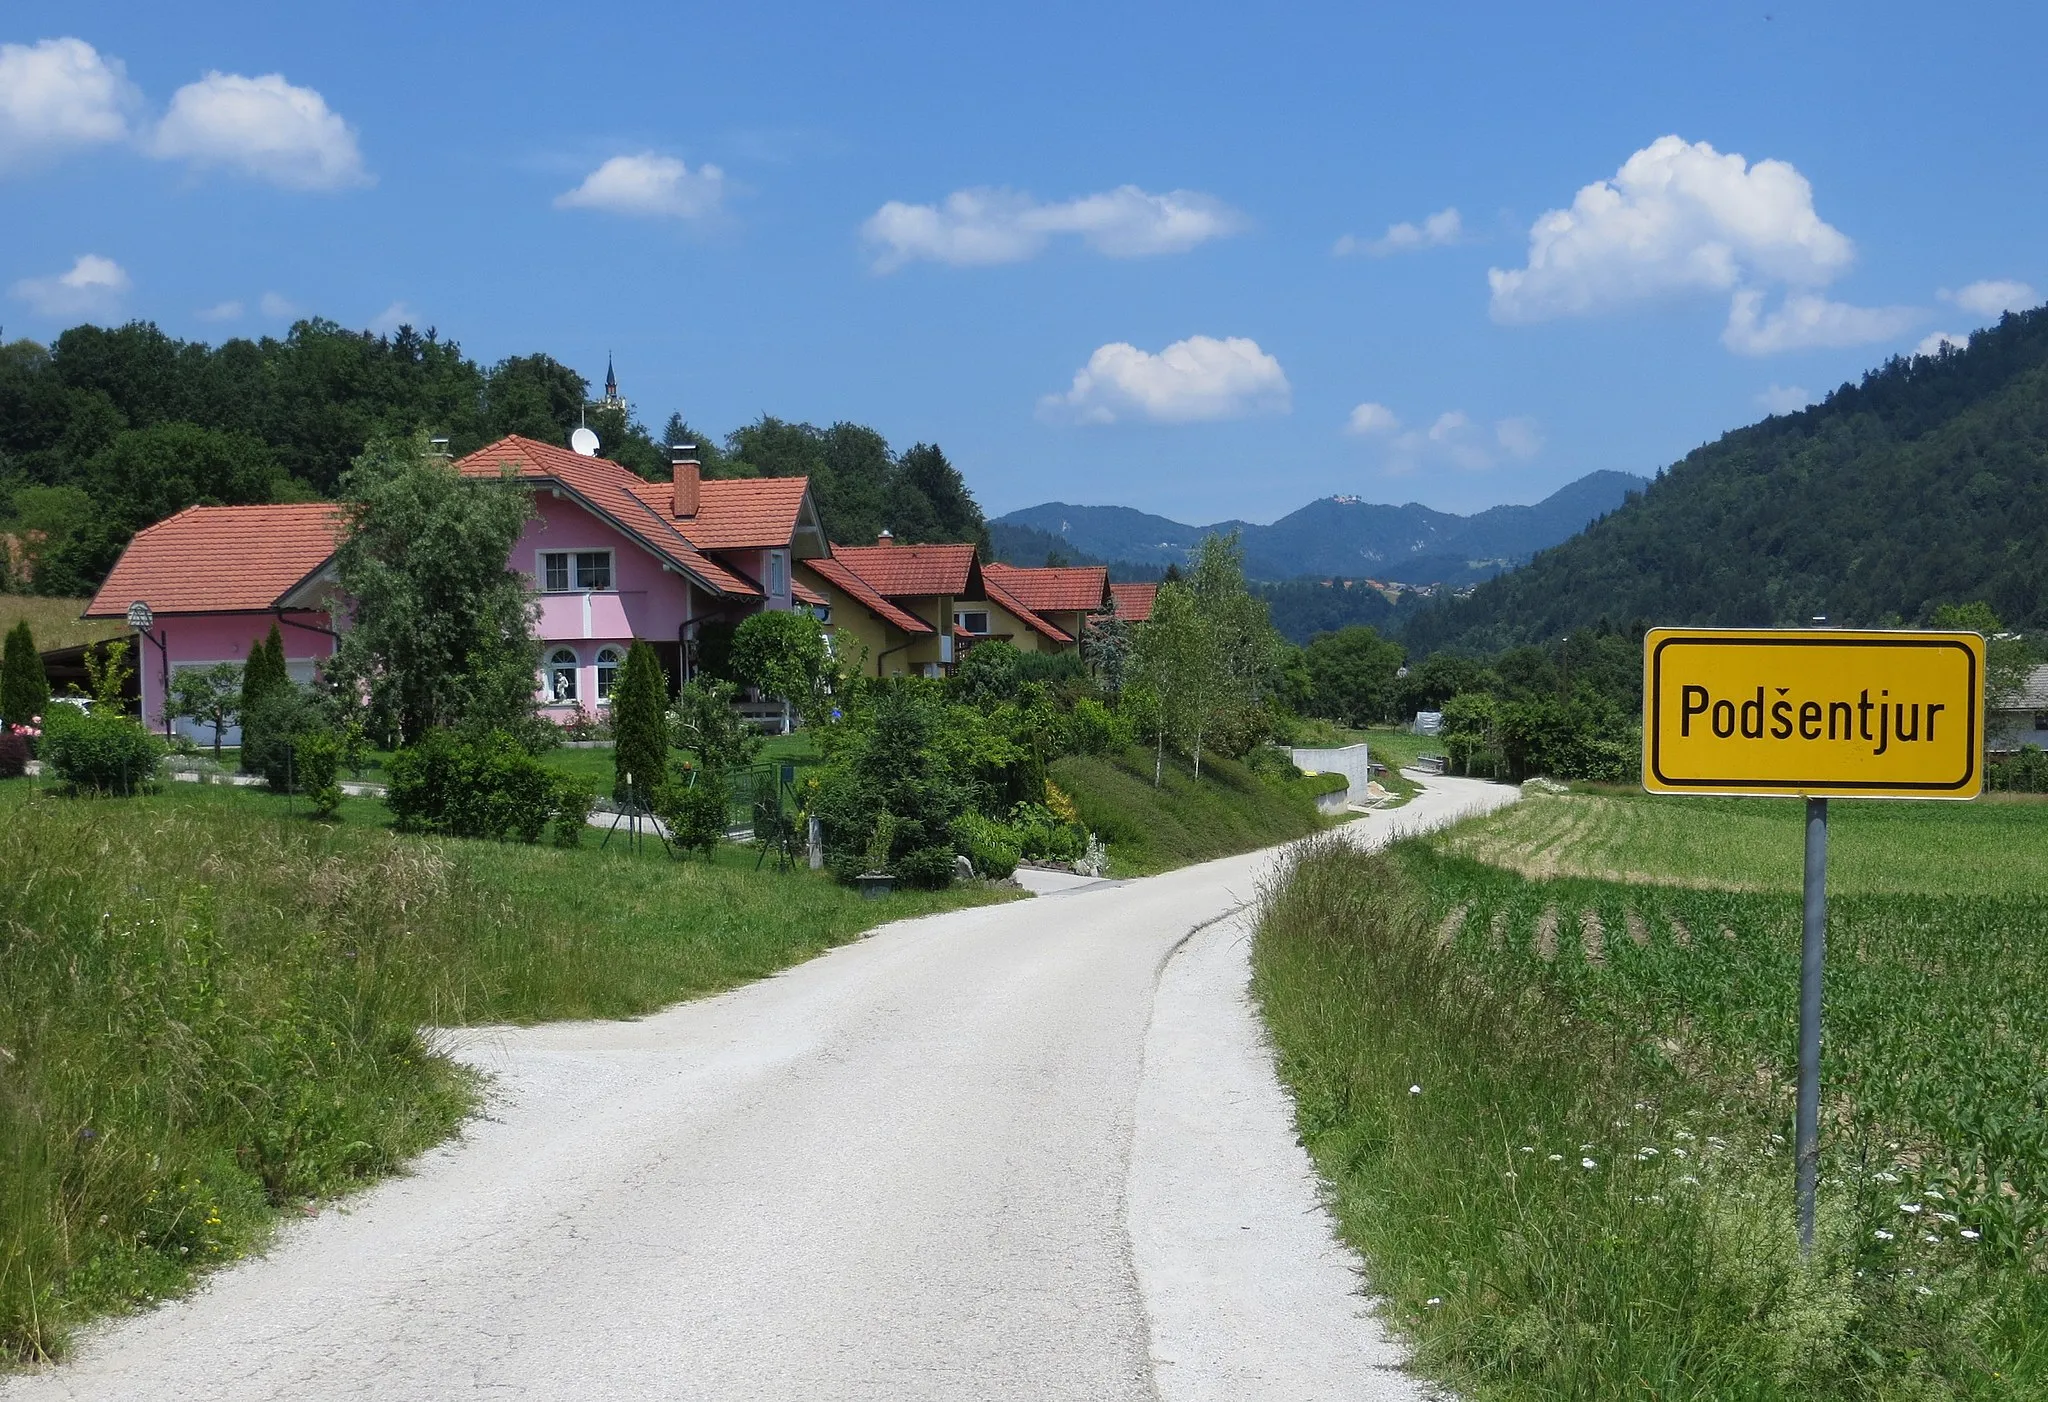 Photo showing: The settlement of Podšentjur, Municipality of Litija, Slovenia